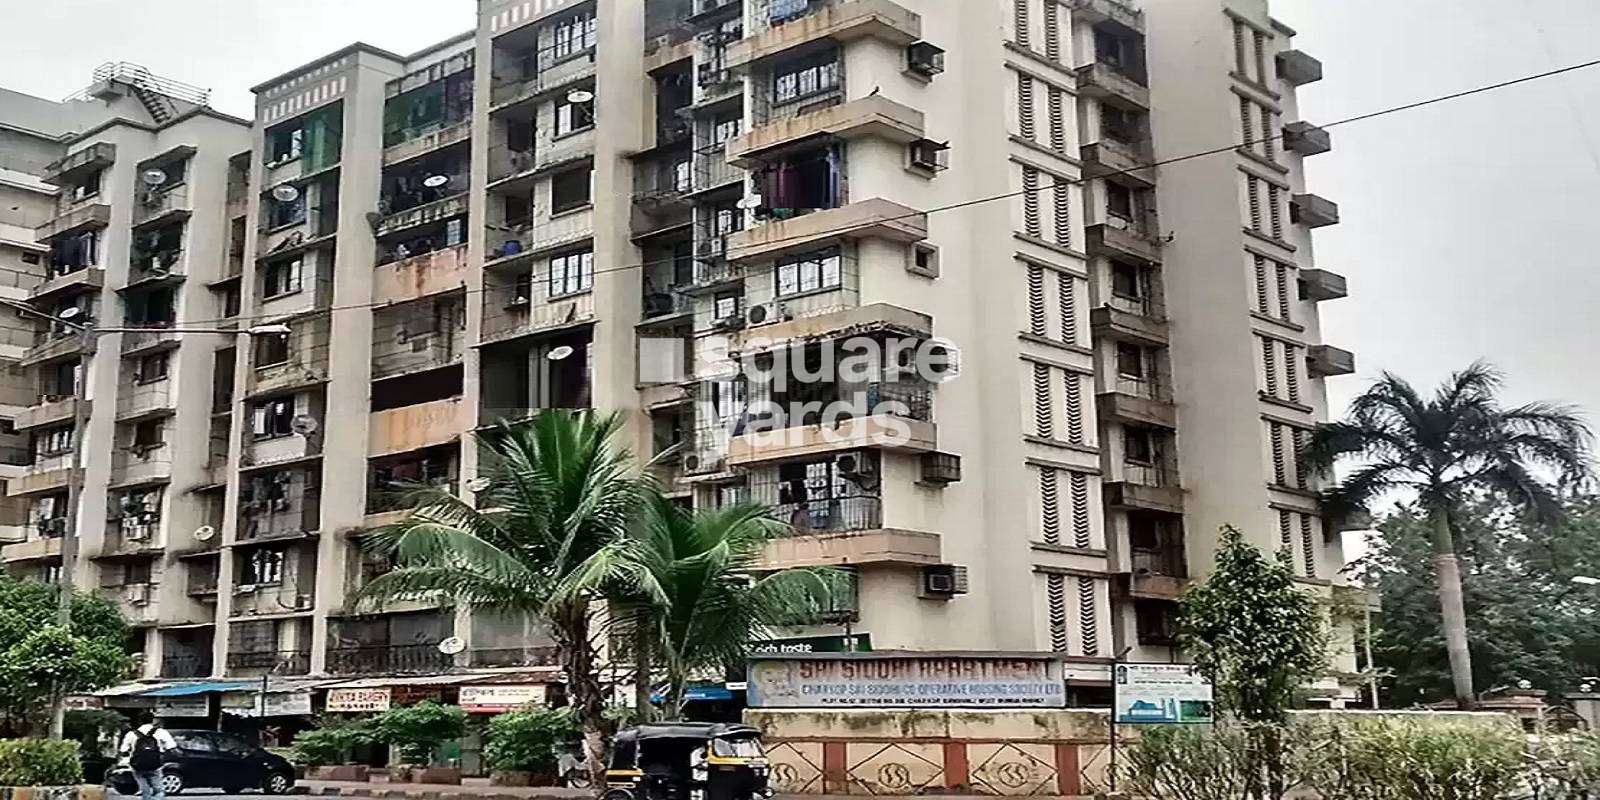 KVC Sai Siddhi Apartments Cover Image